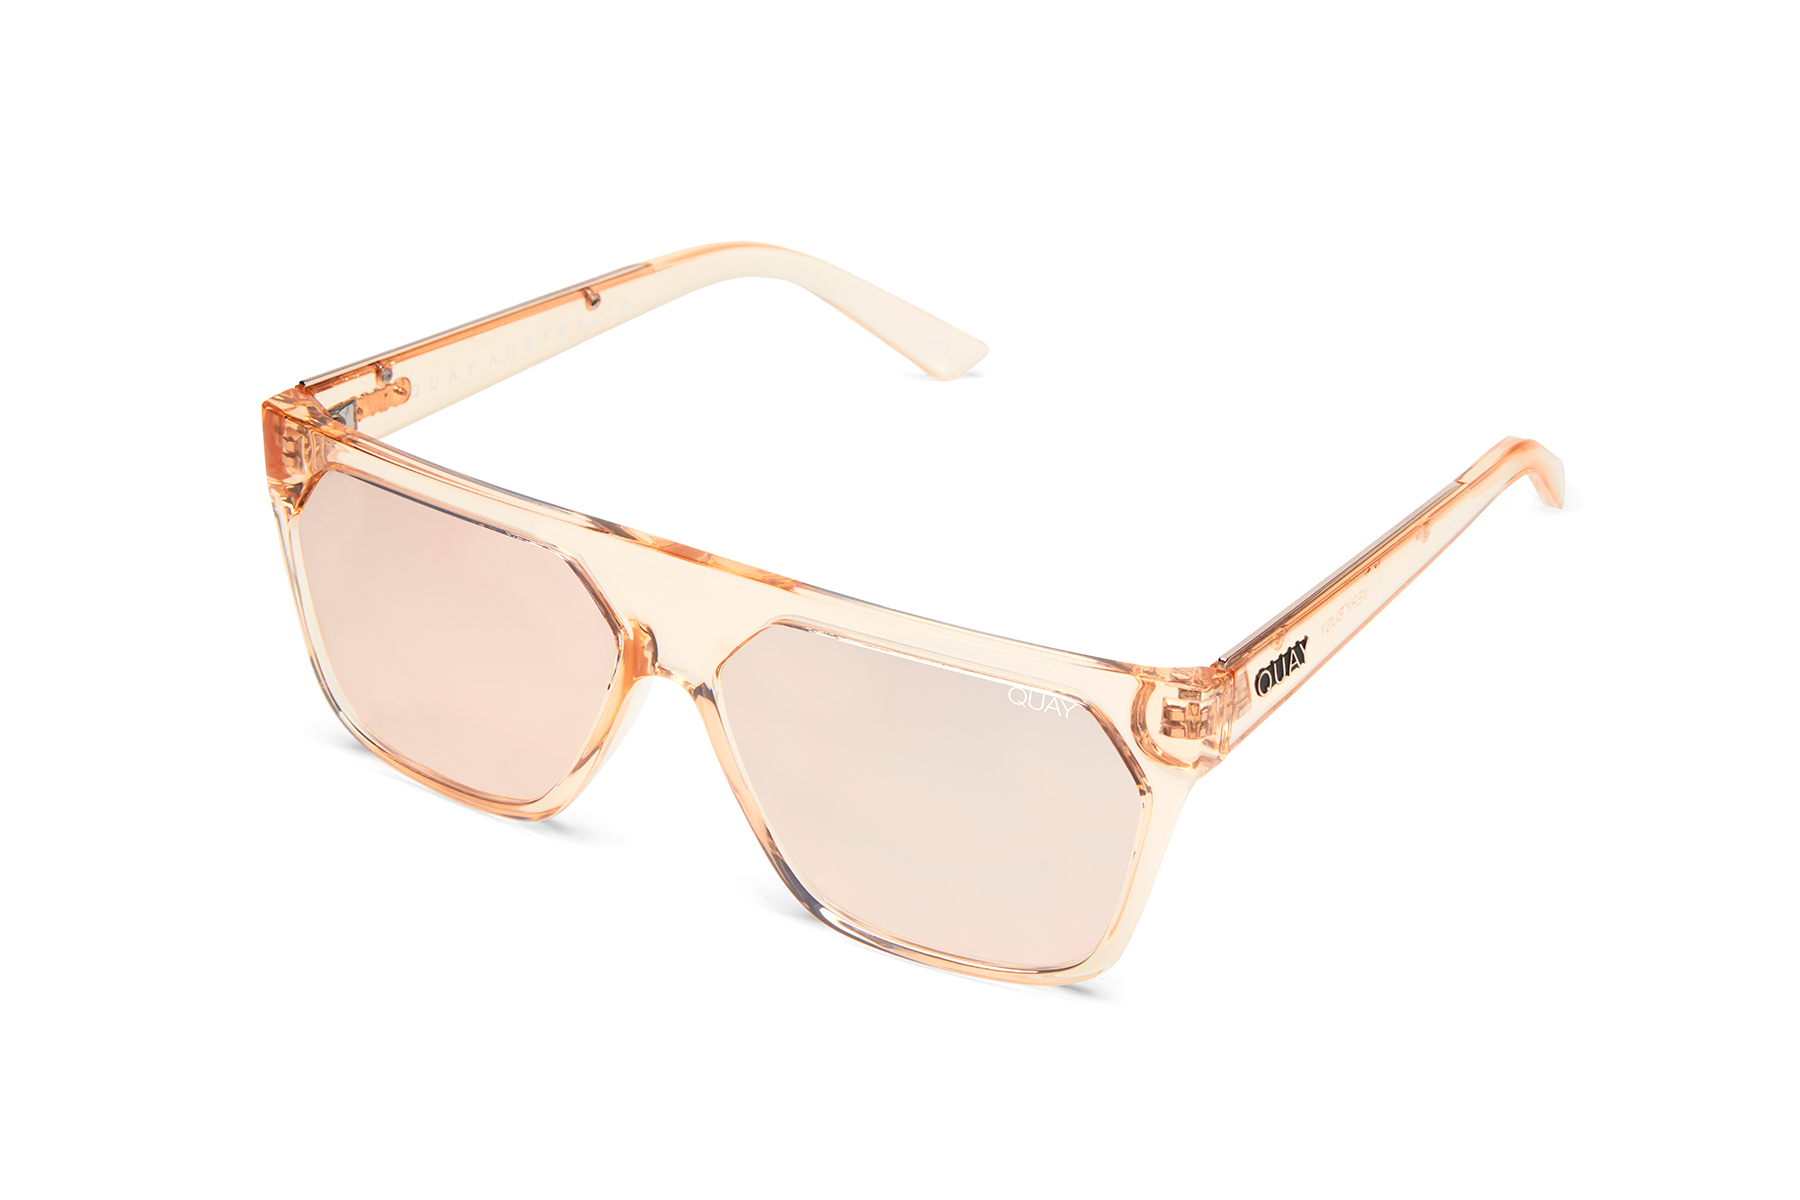 Jaclyn Hill x Quay Australia Sunglasses Collection: Details